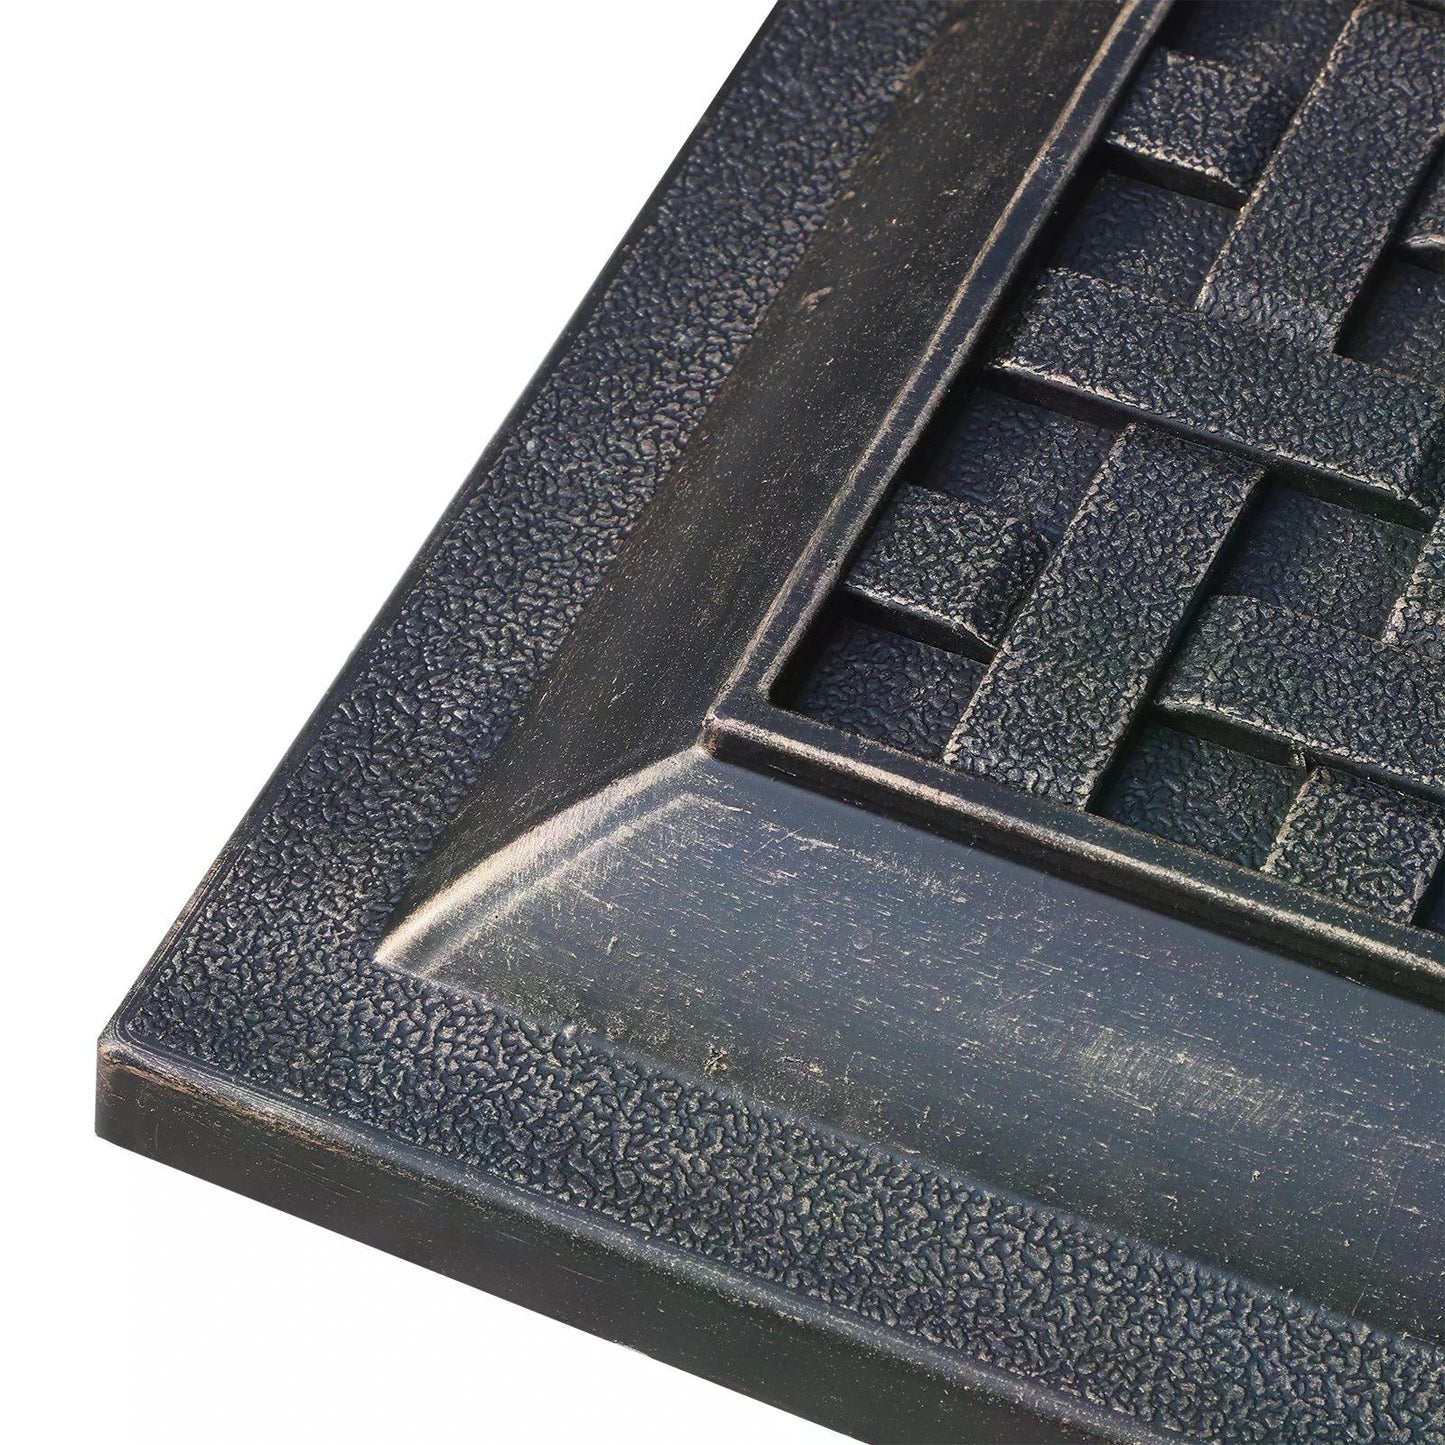 Outsunny Garden Parasol Base: Heavy-Duty 44cm Square Bronze Resin, Weatherproof, Elegant Design